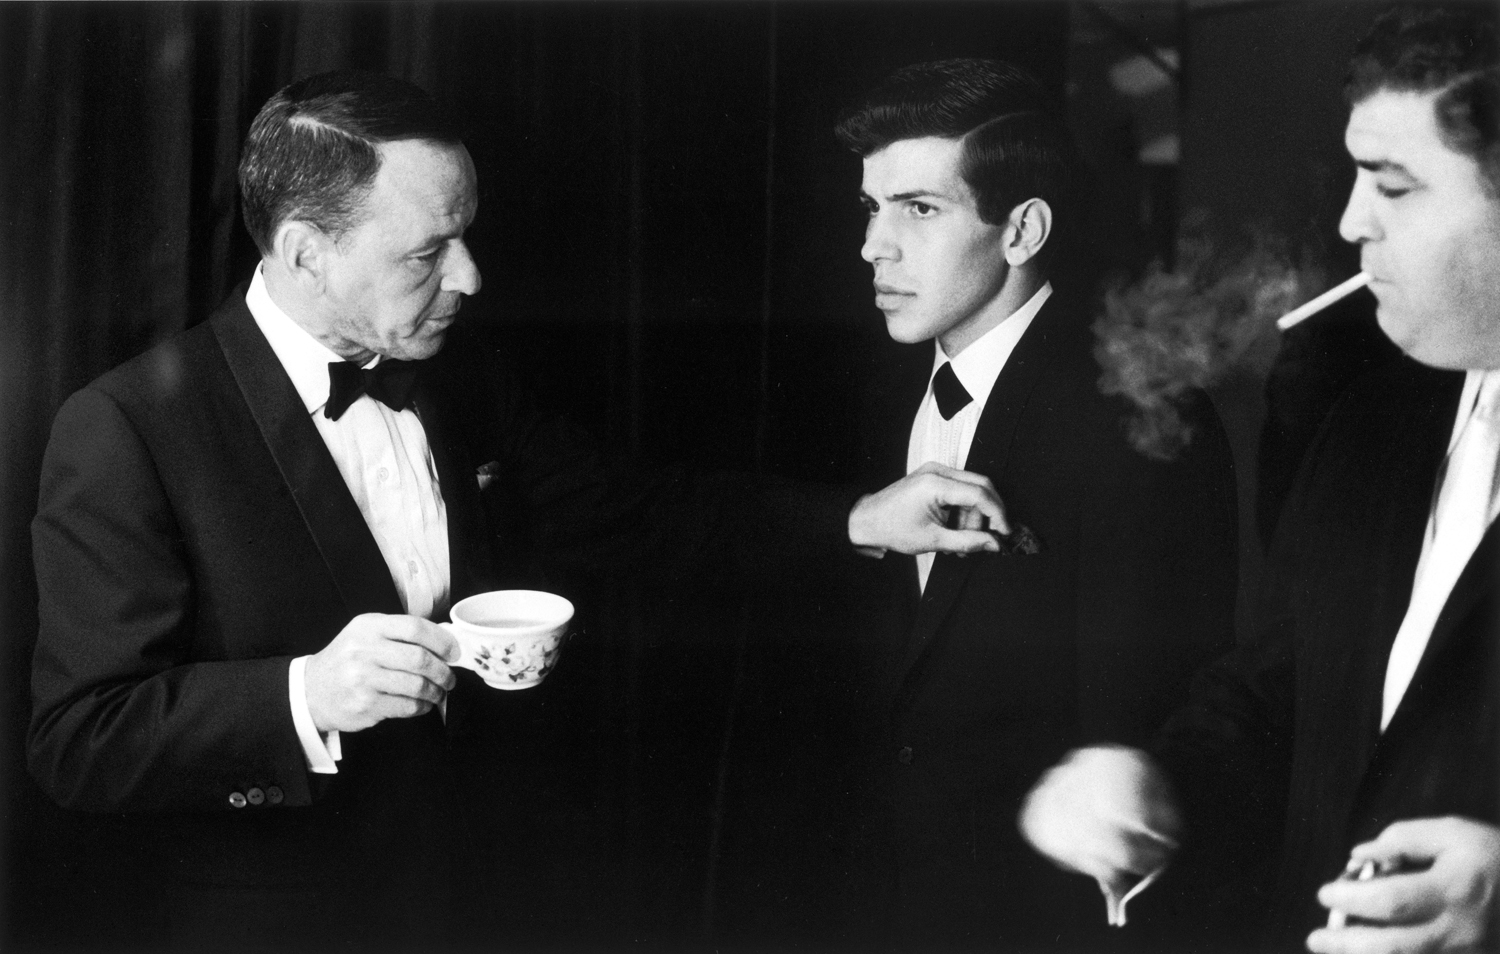 Frank Sinatra adjusts his son Frank Jr.'s pocket handkerchief while bodyguard looks on, Las Vegas, 1965.